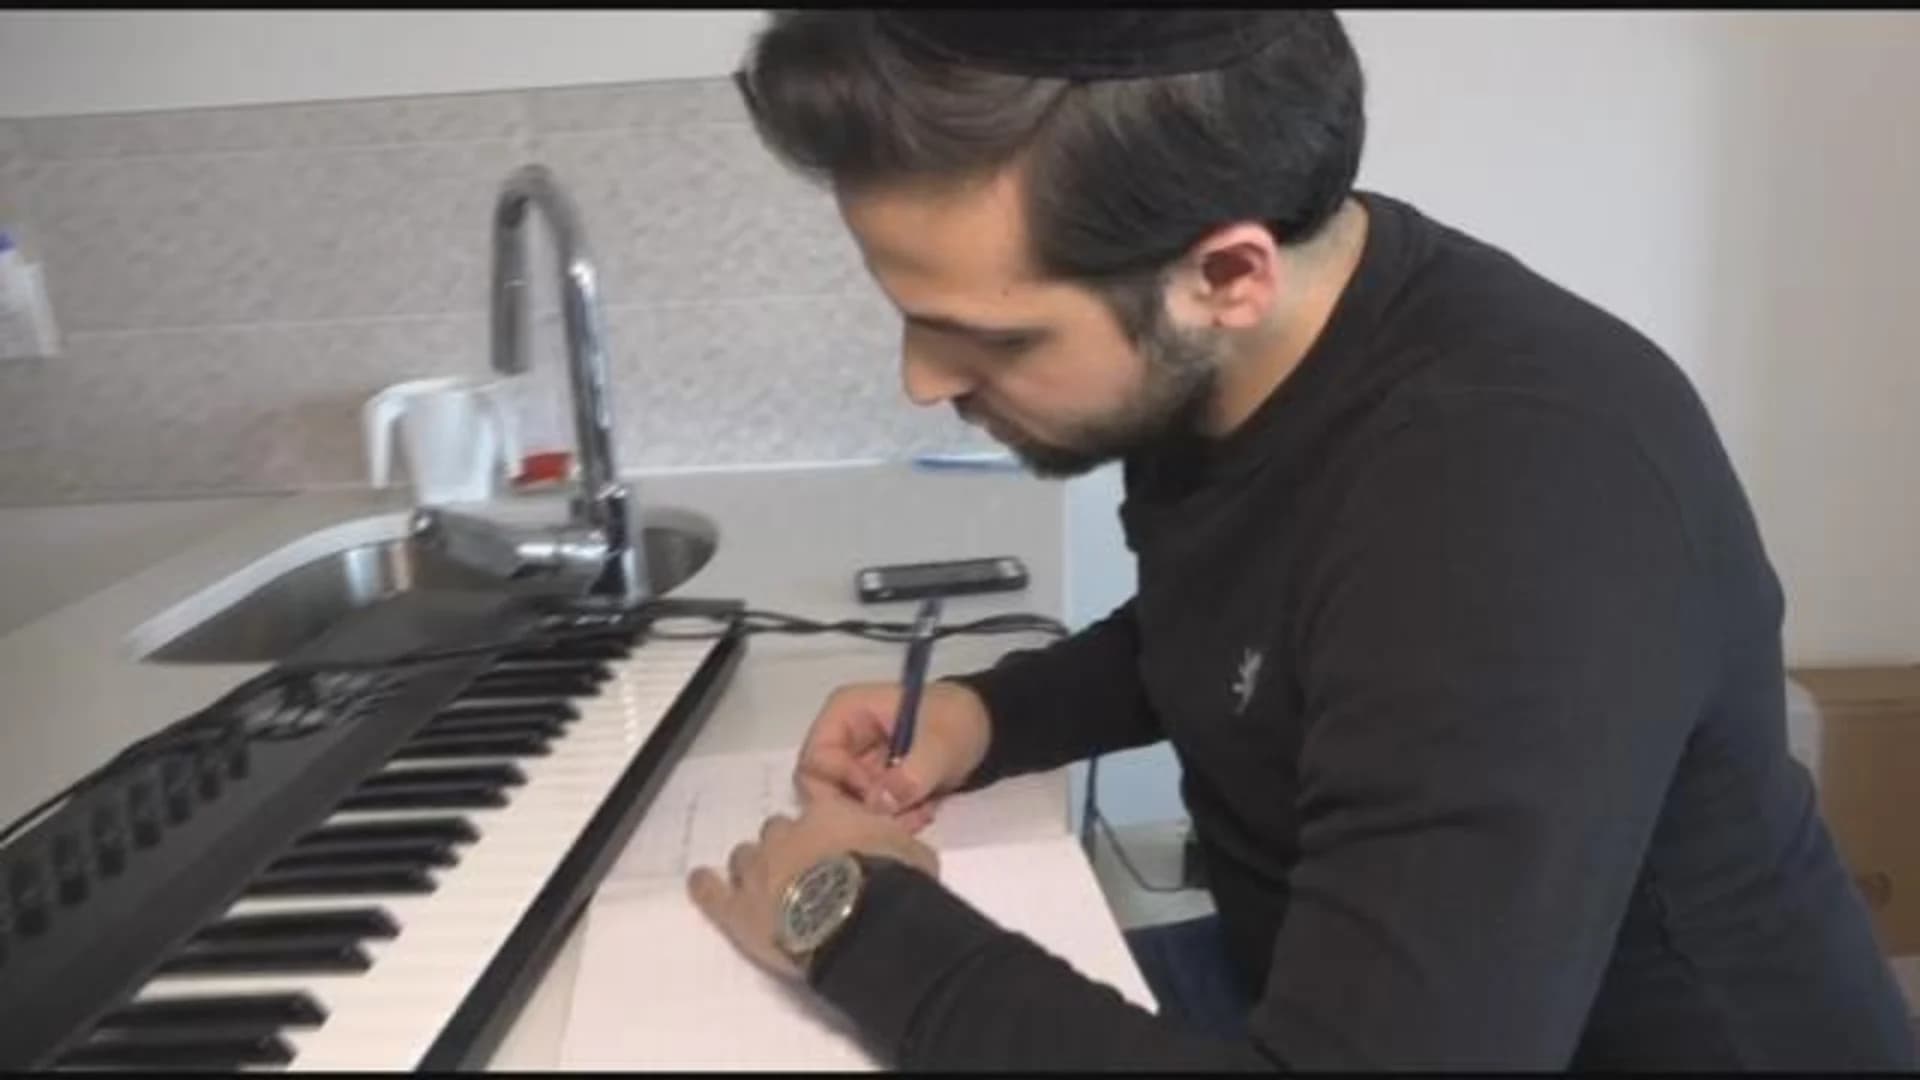 Crown Heights-based Hasidic singer releases song against anti-Semitism